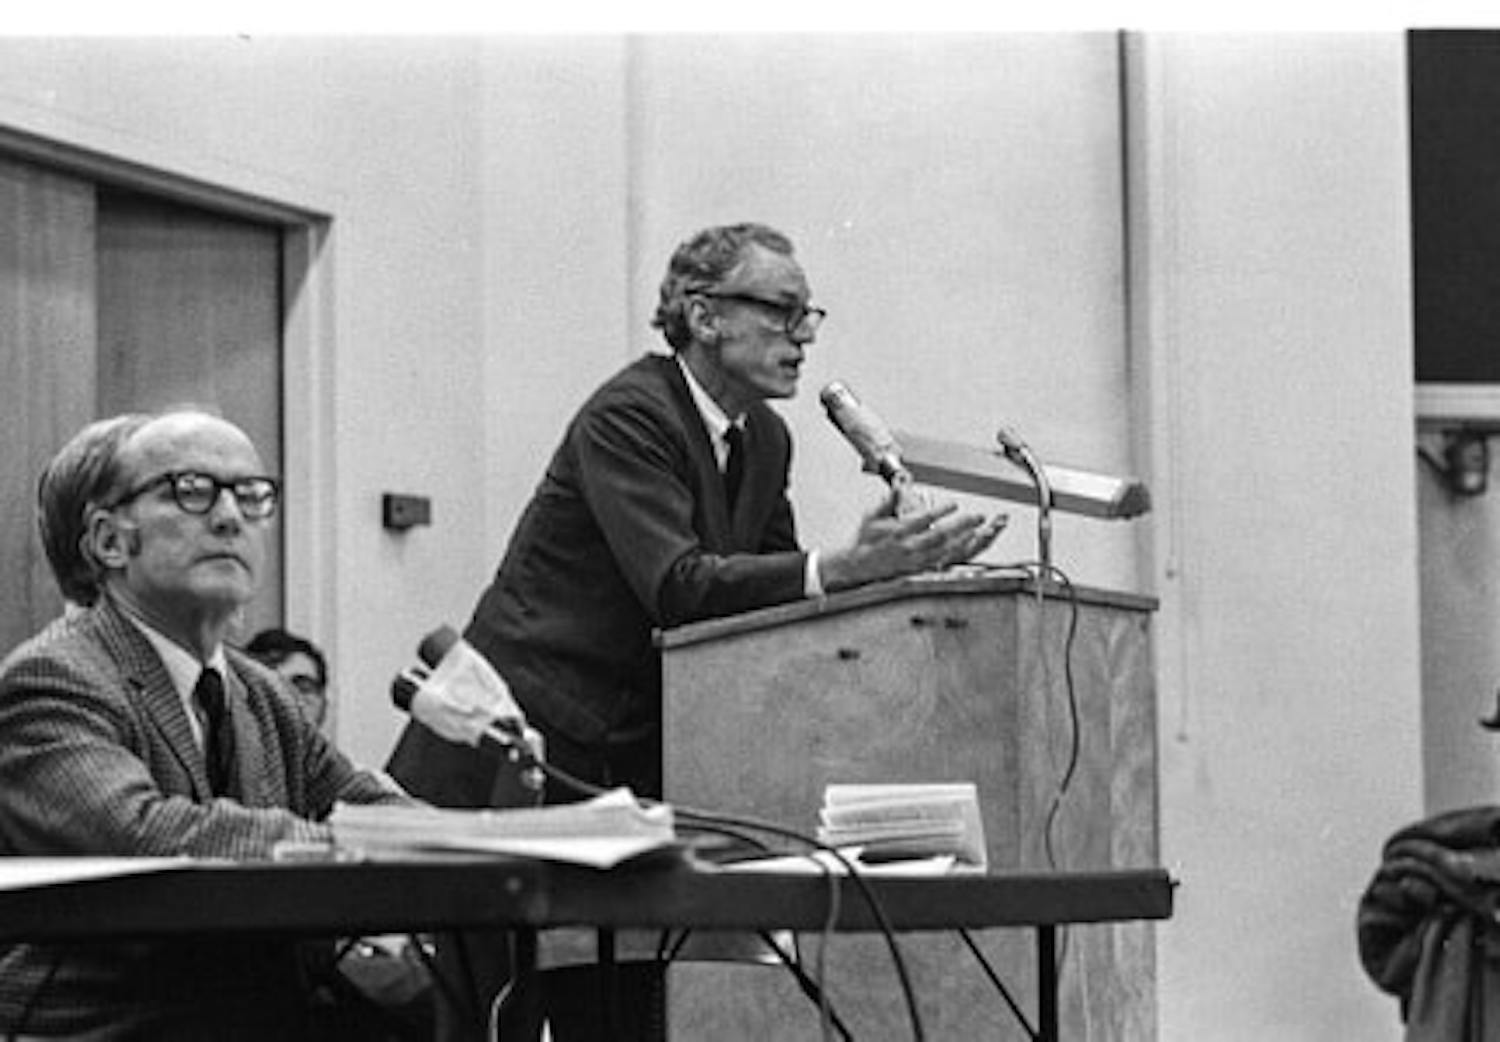 Peter Regan speaking at a faculty senate meeting in 1970.